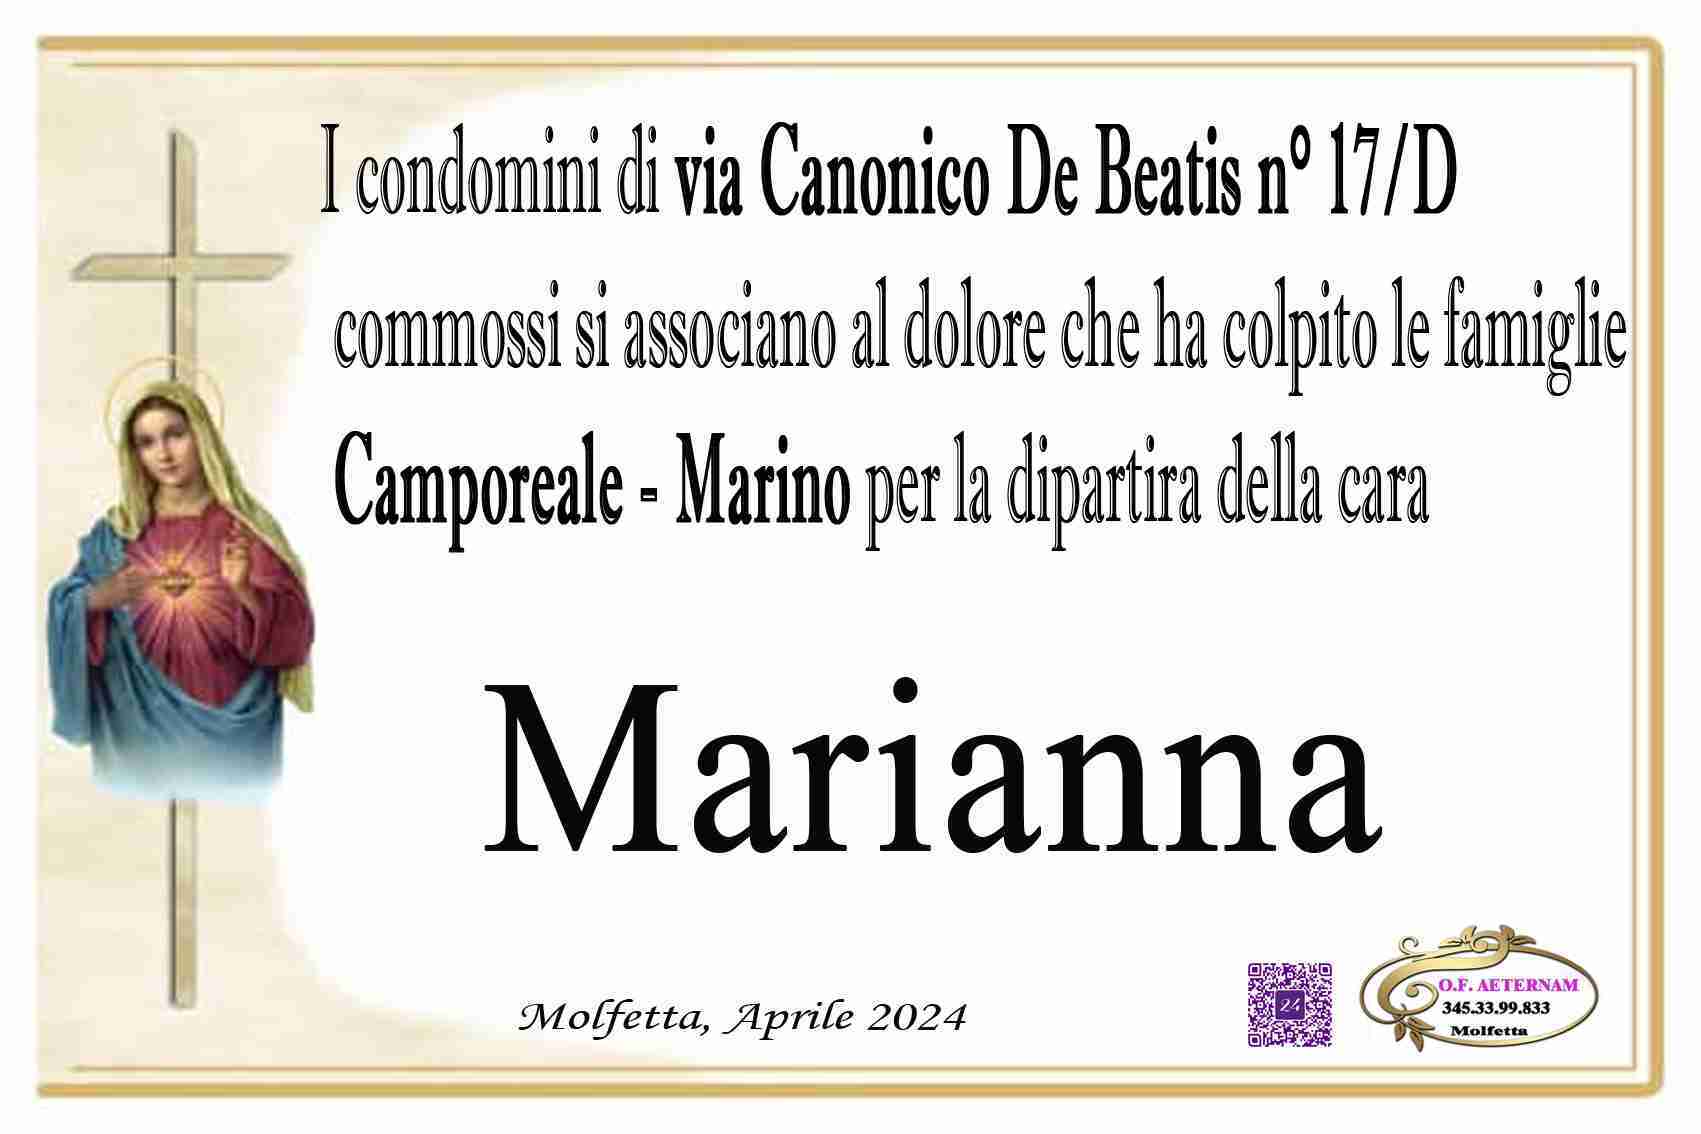 Marianna Camporeale